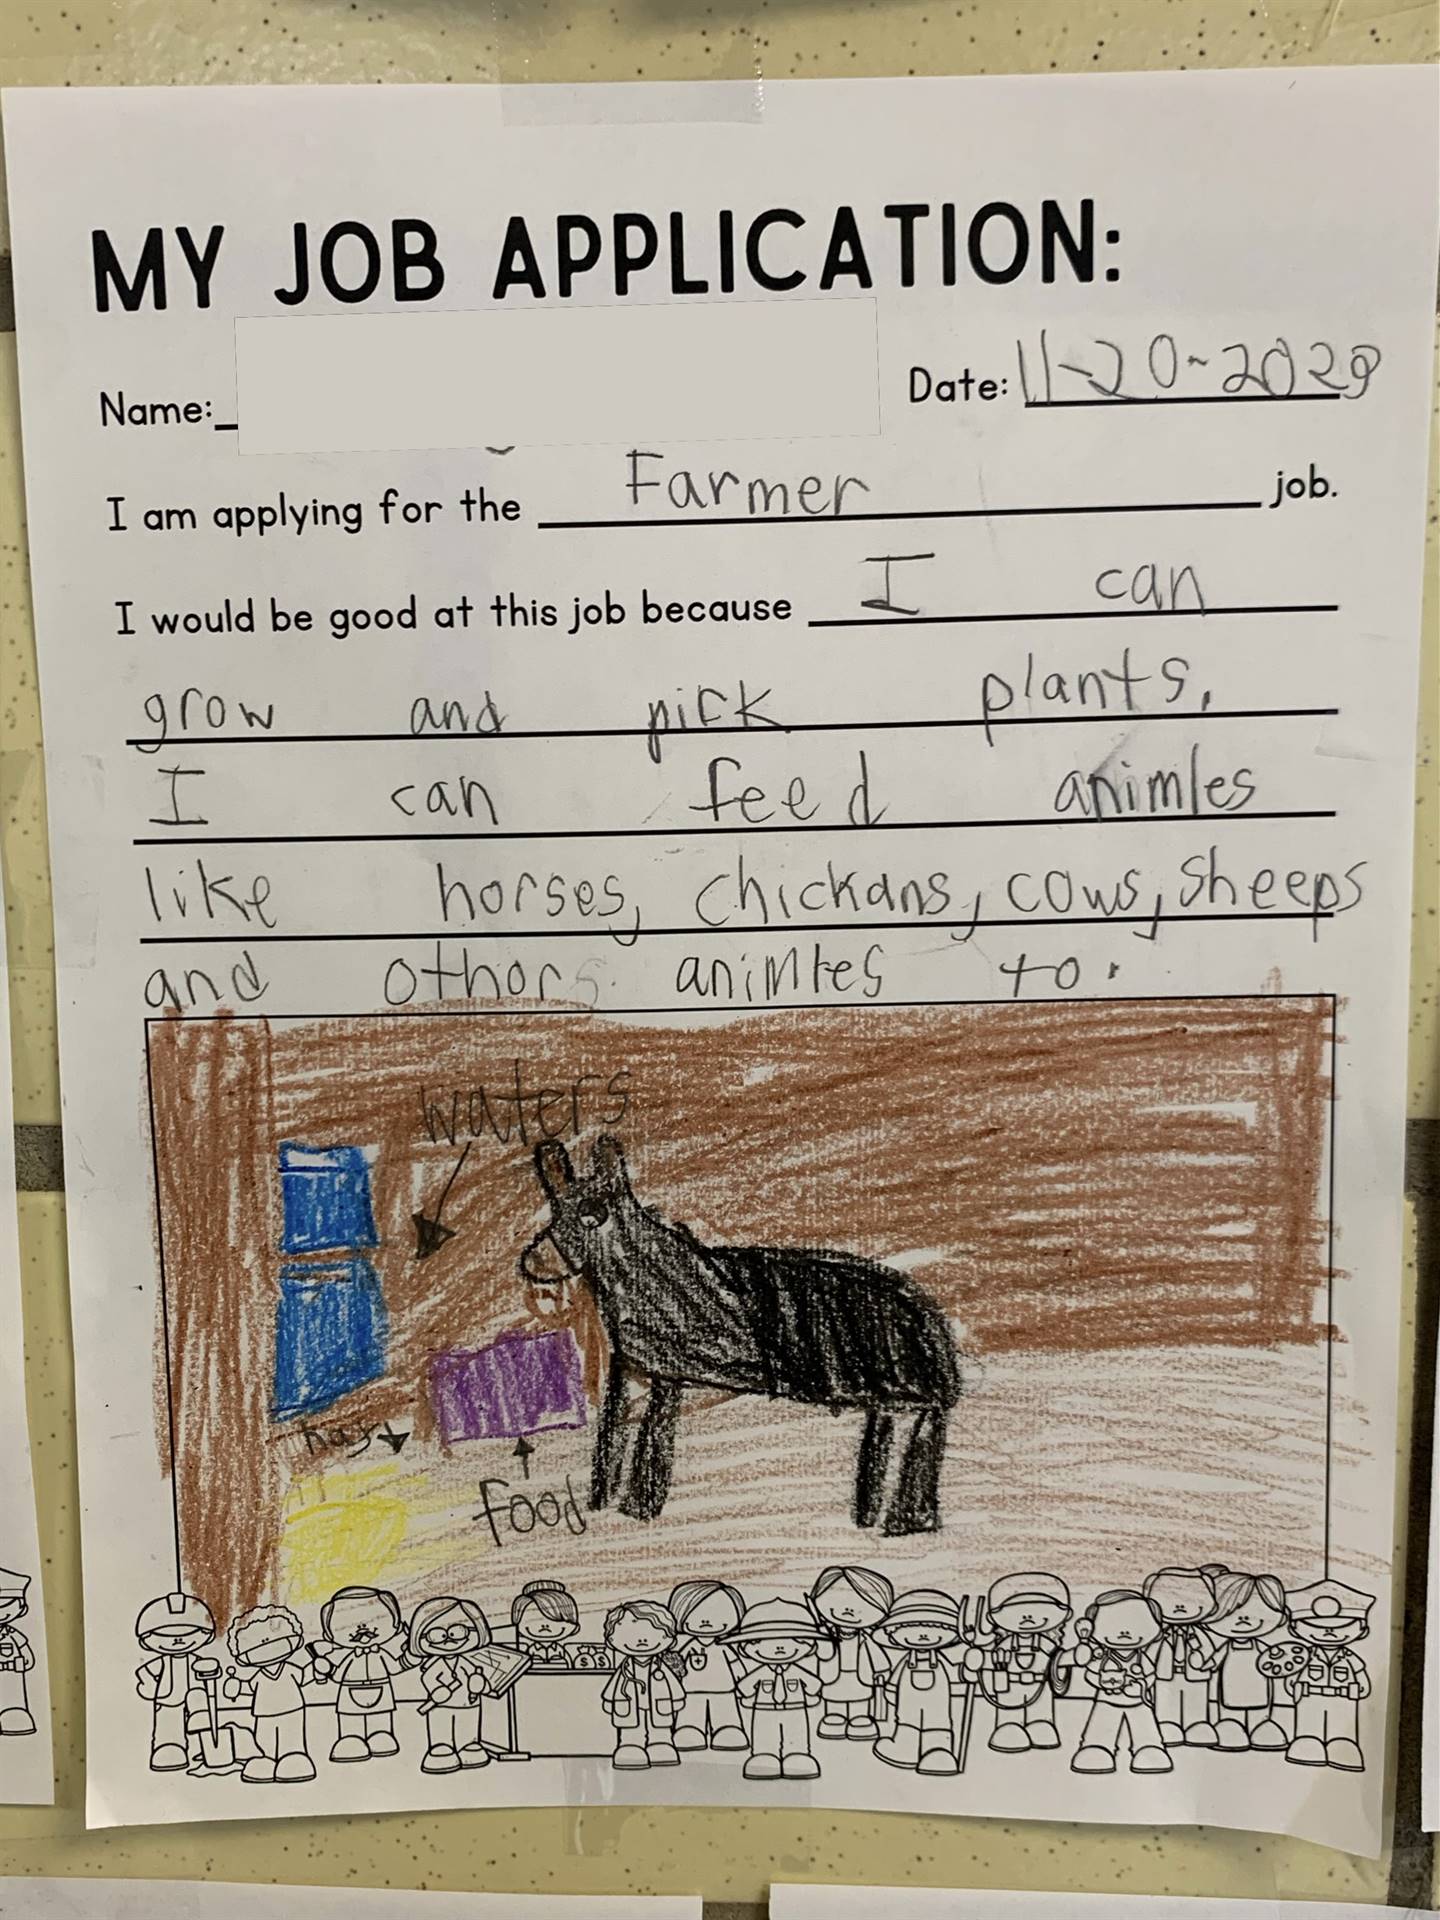 A 3rd grade job application for a farmer.